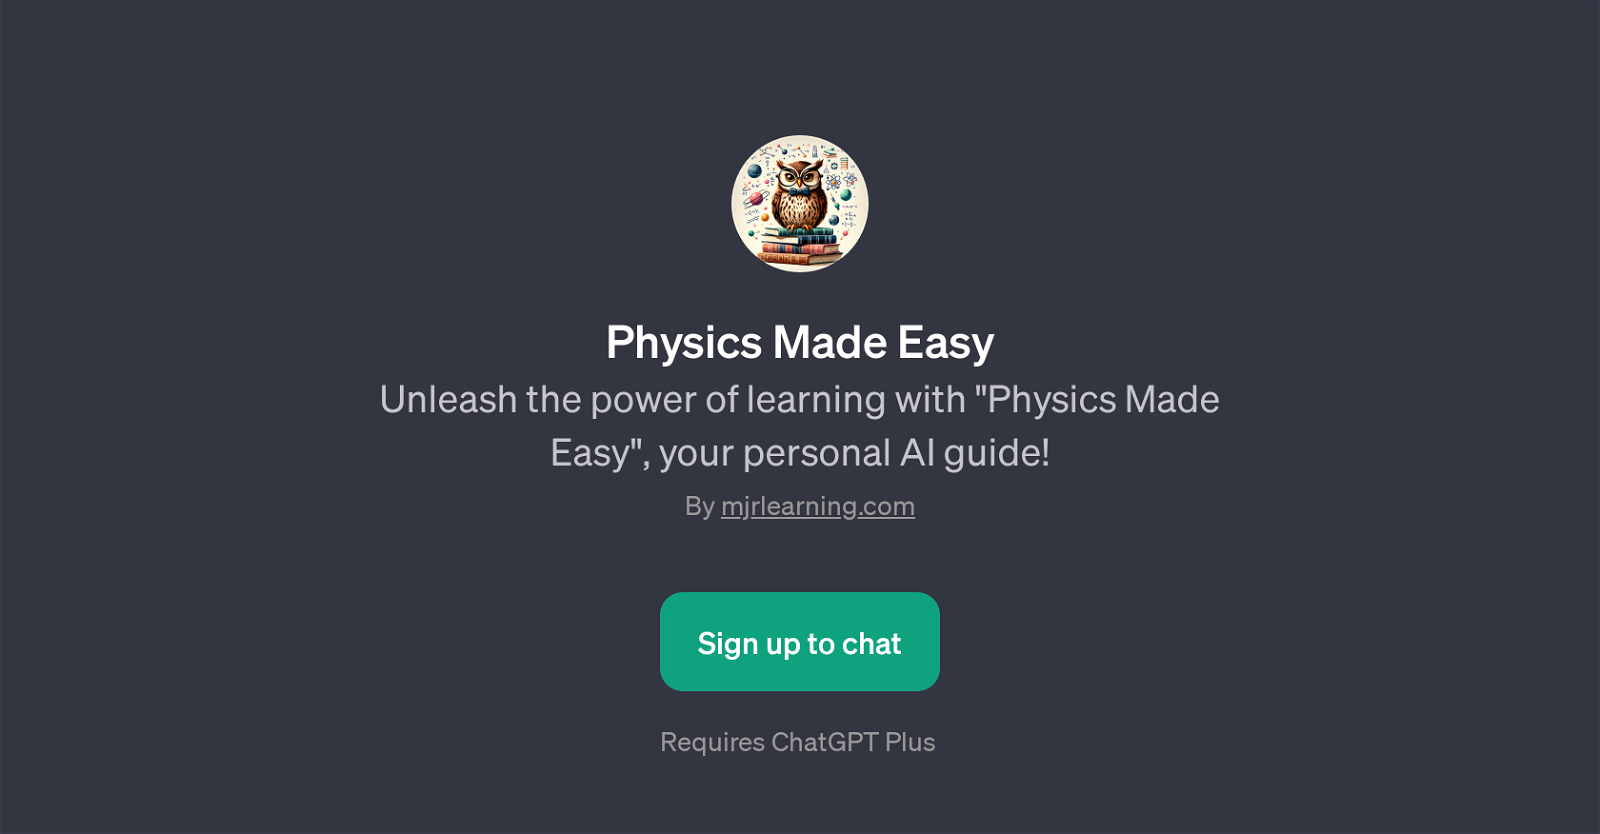 Physics Made Easy website